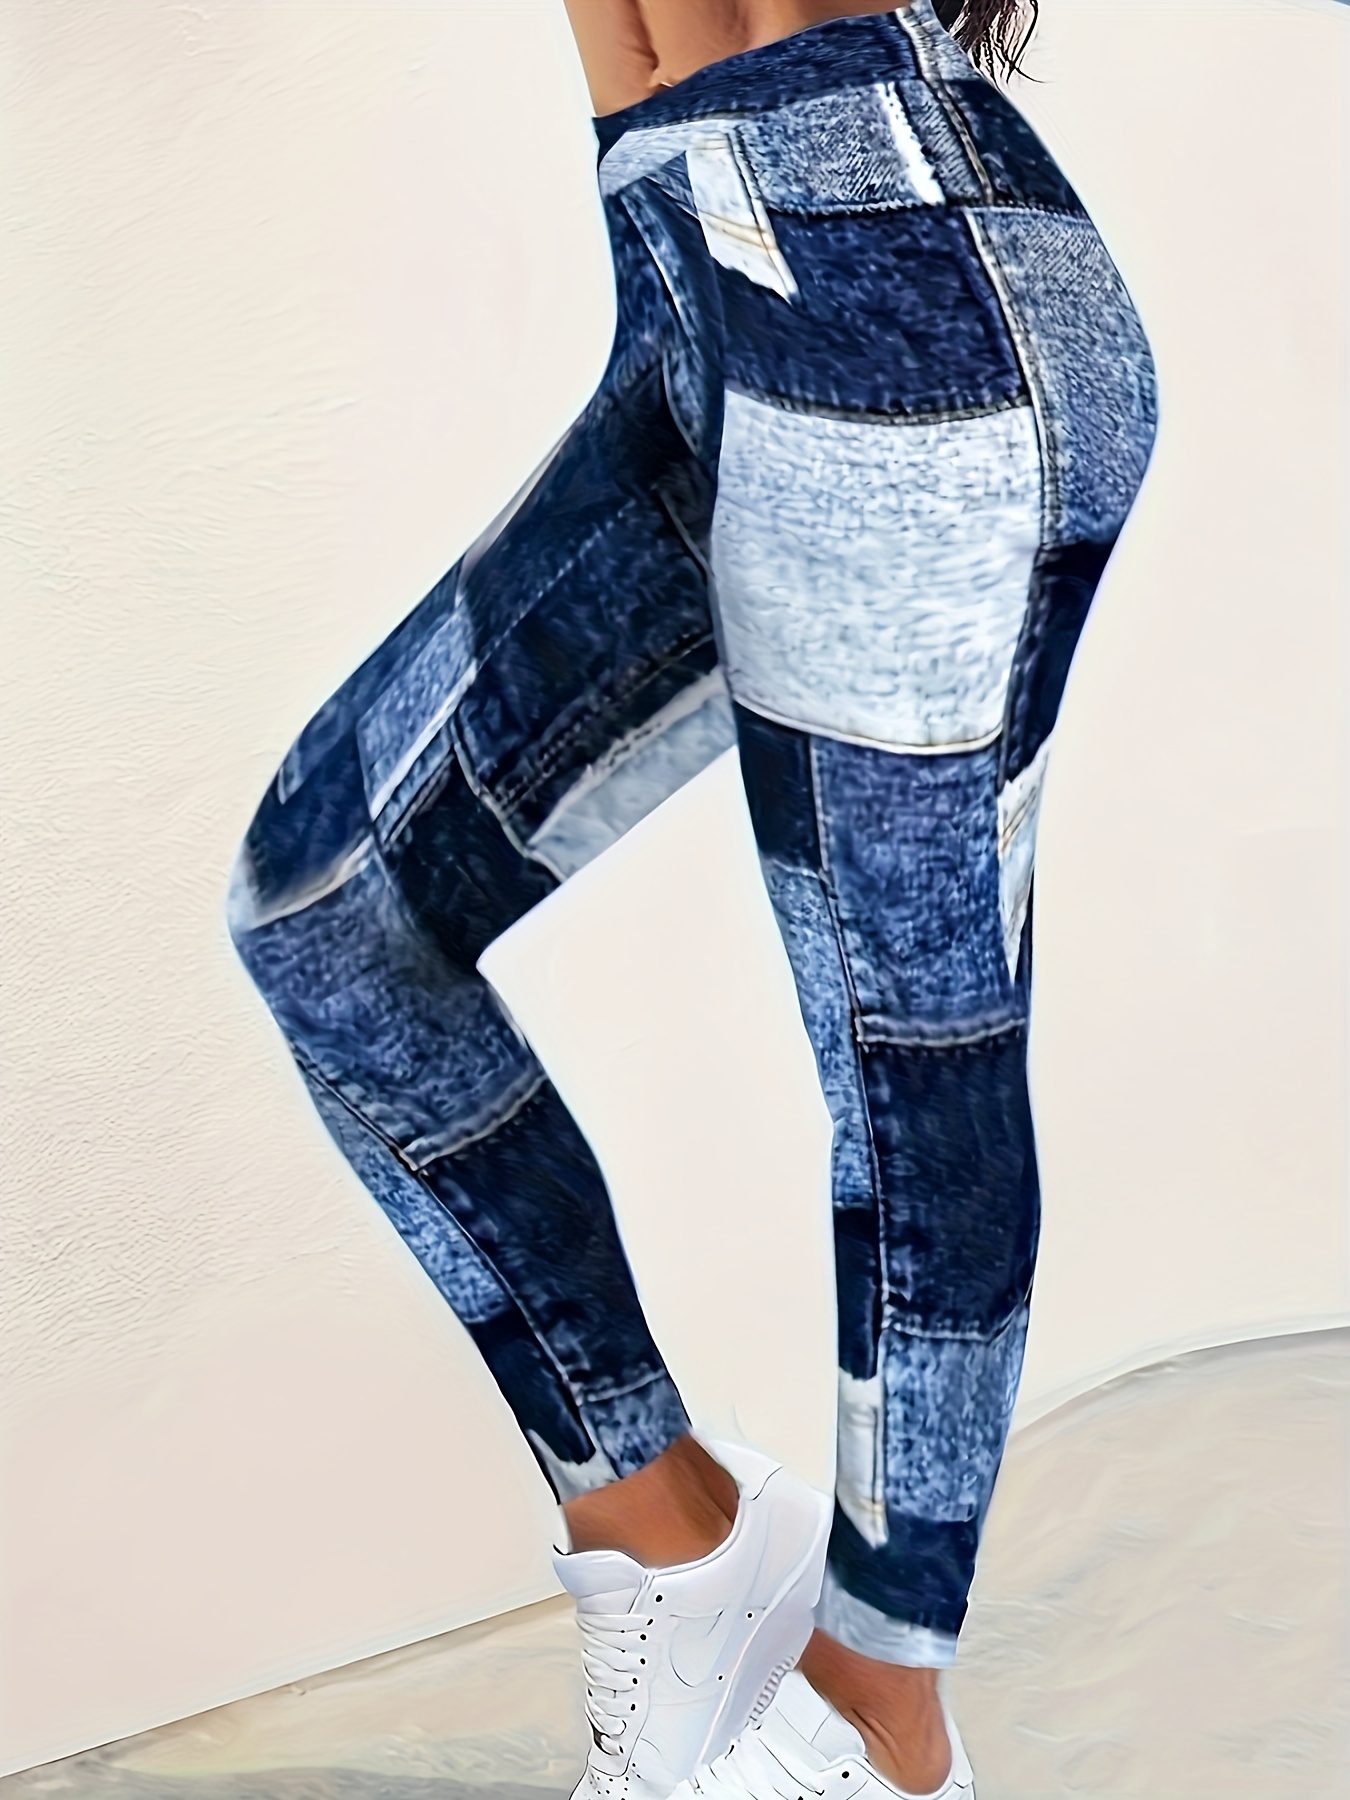 Miracle Jeans® Dress Blues Athleisure Leggings